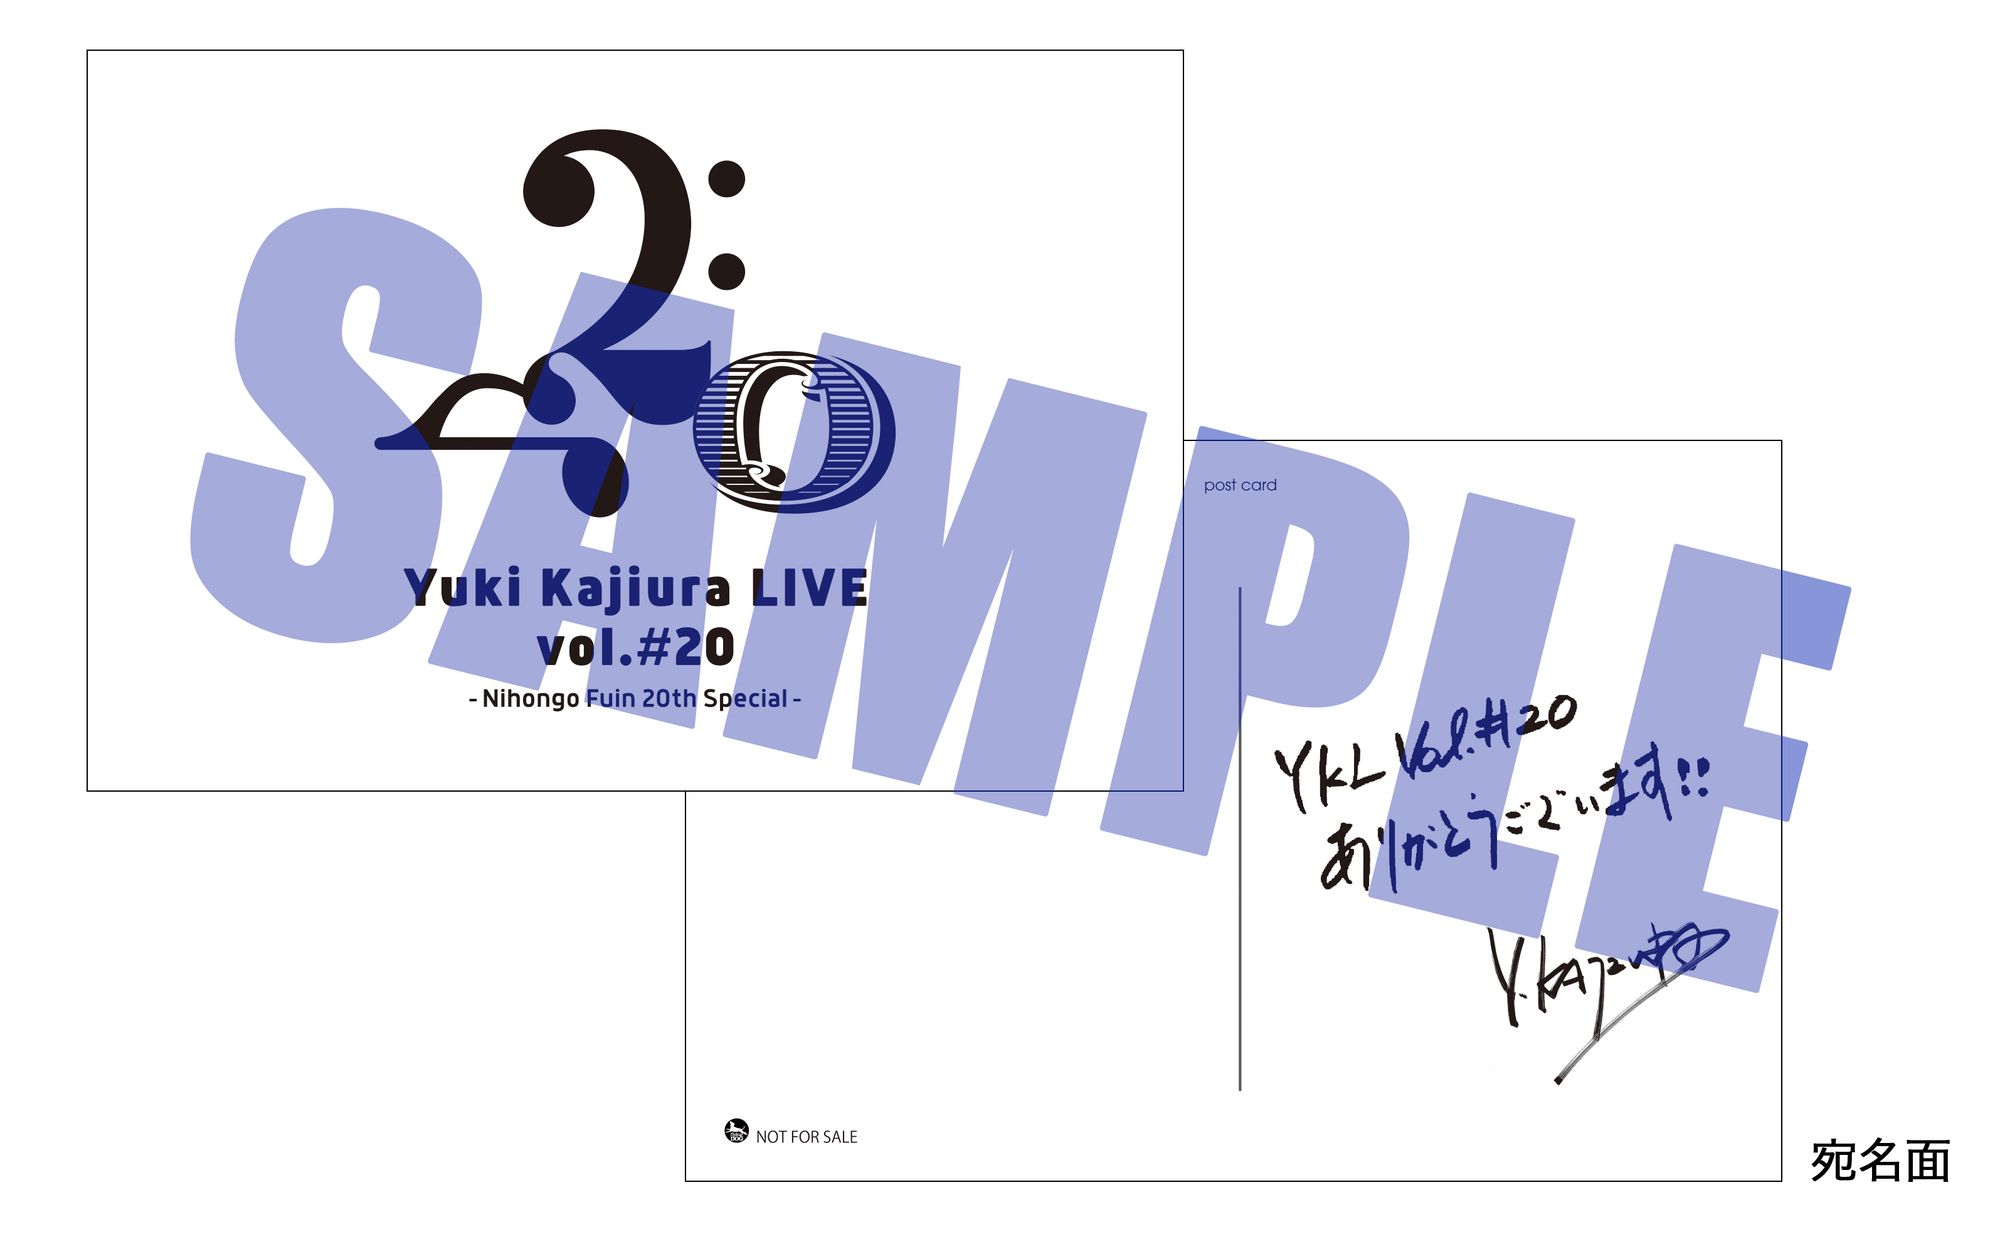 Live】Yuki Kajiura LIVE vol.#20 ～日本語封印20th Special～ フライングドッグ商品 会場特典決定! |  FictionJunction Station